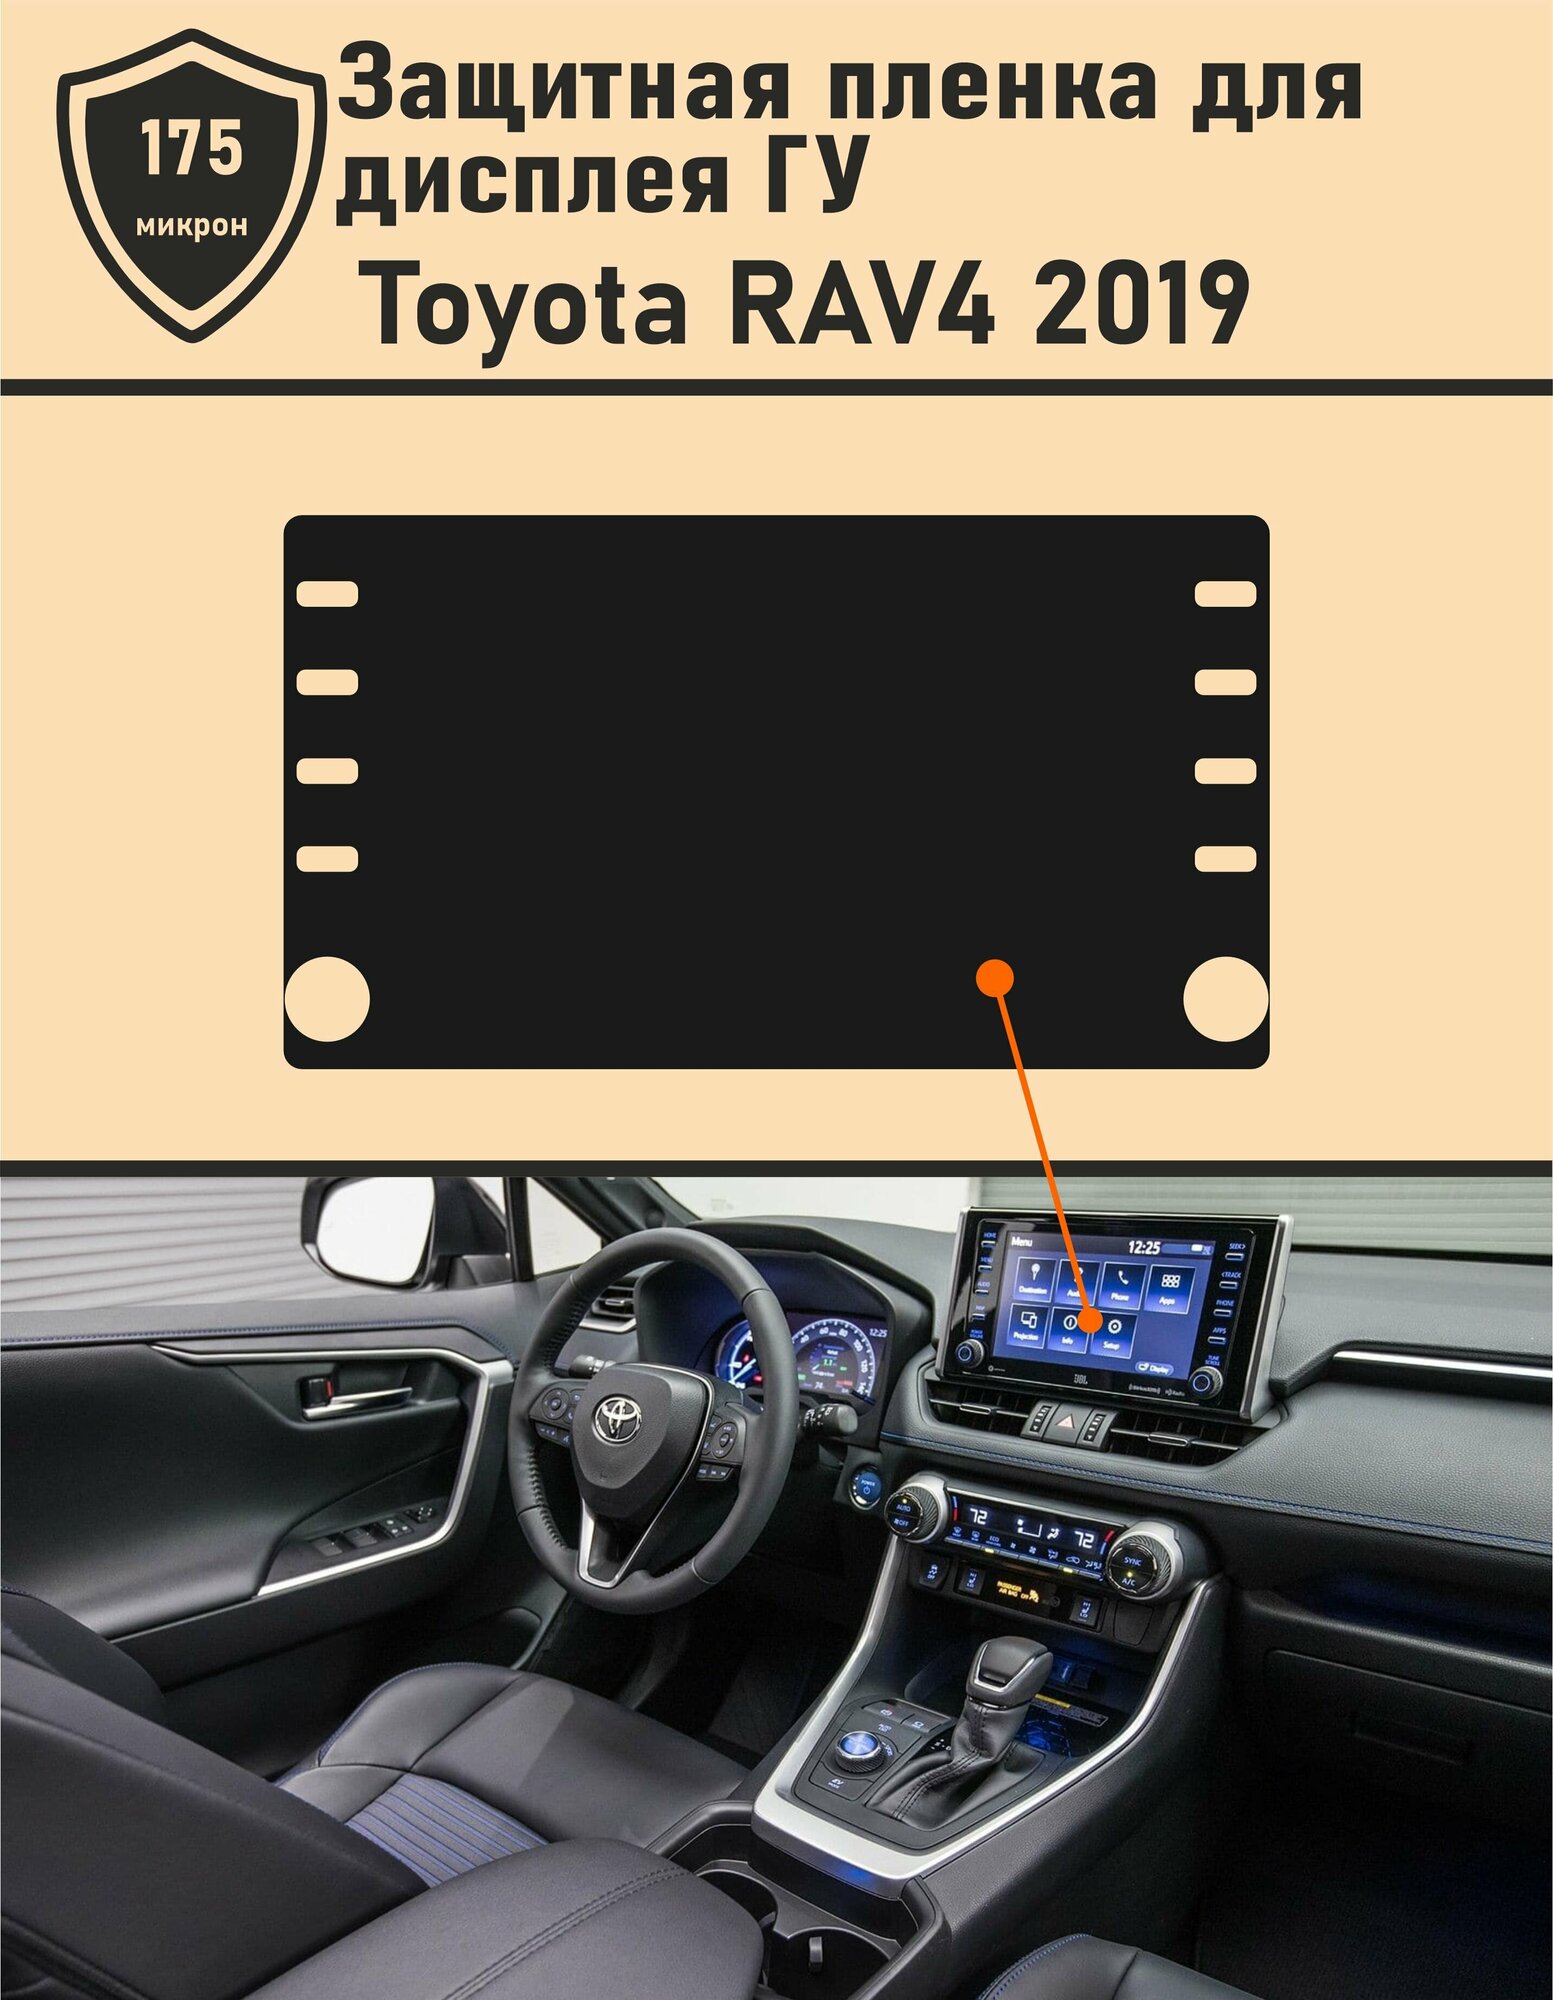 Toyota RAV4 2019/ Защитная пленка для дисплея ГУ